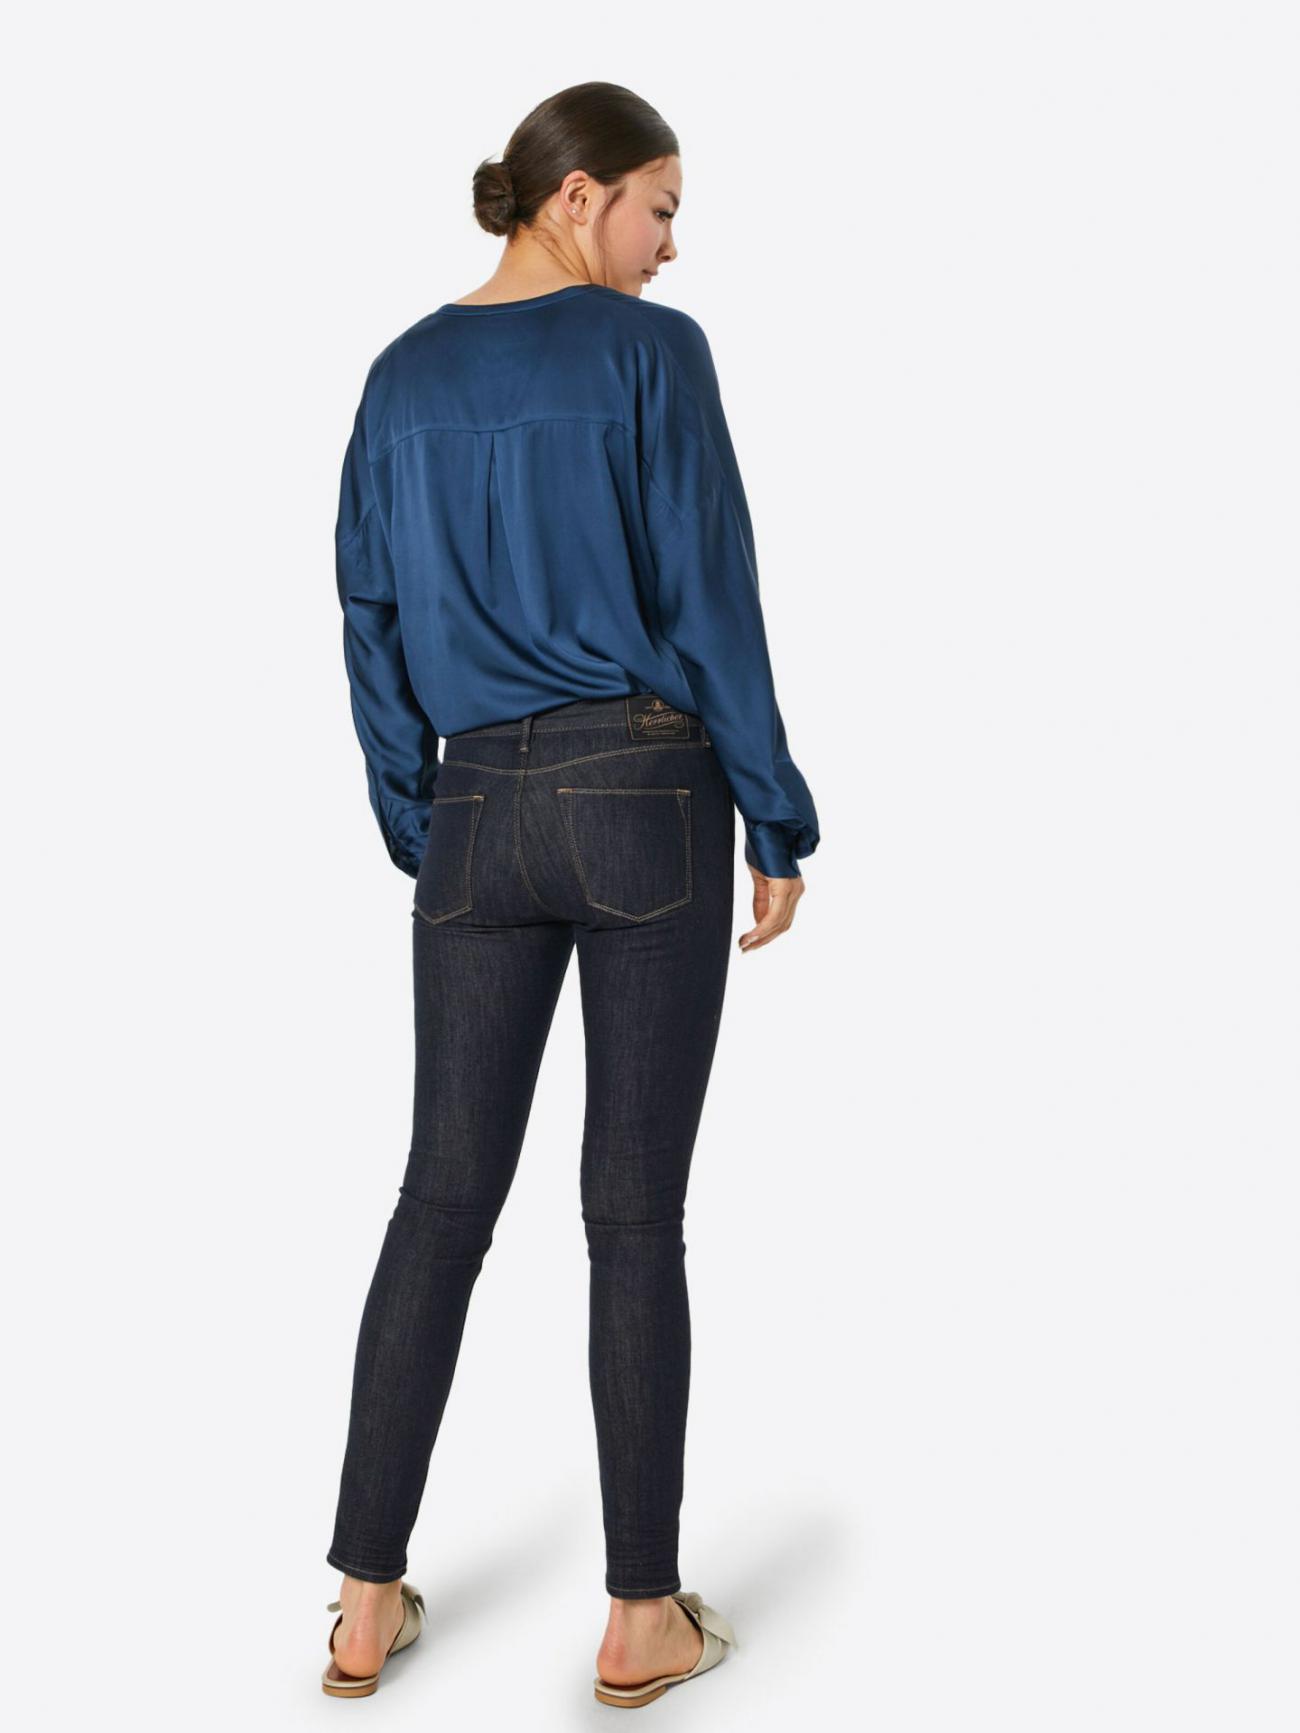 tenue jean bleu foncé femme